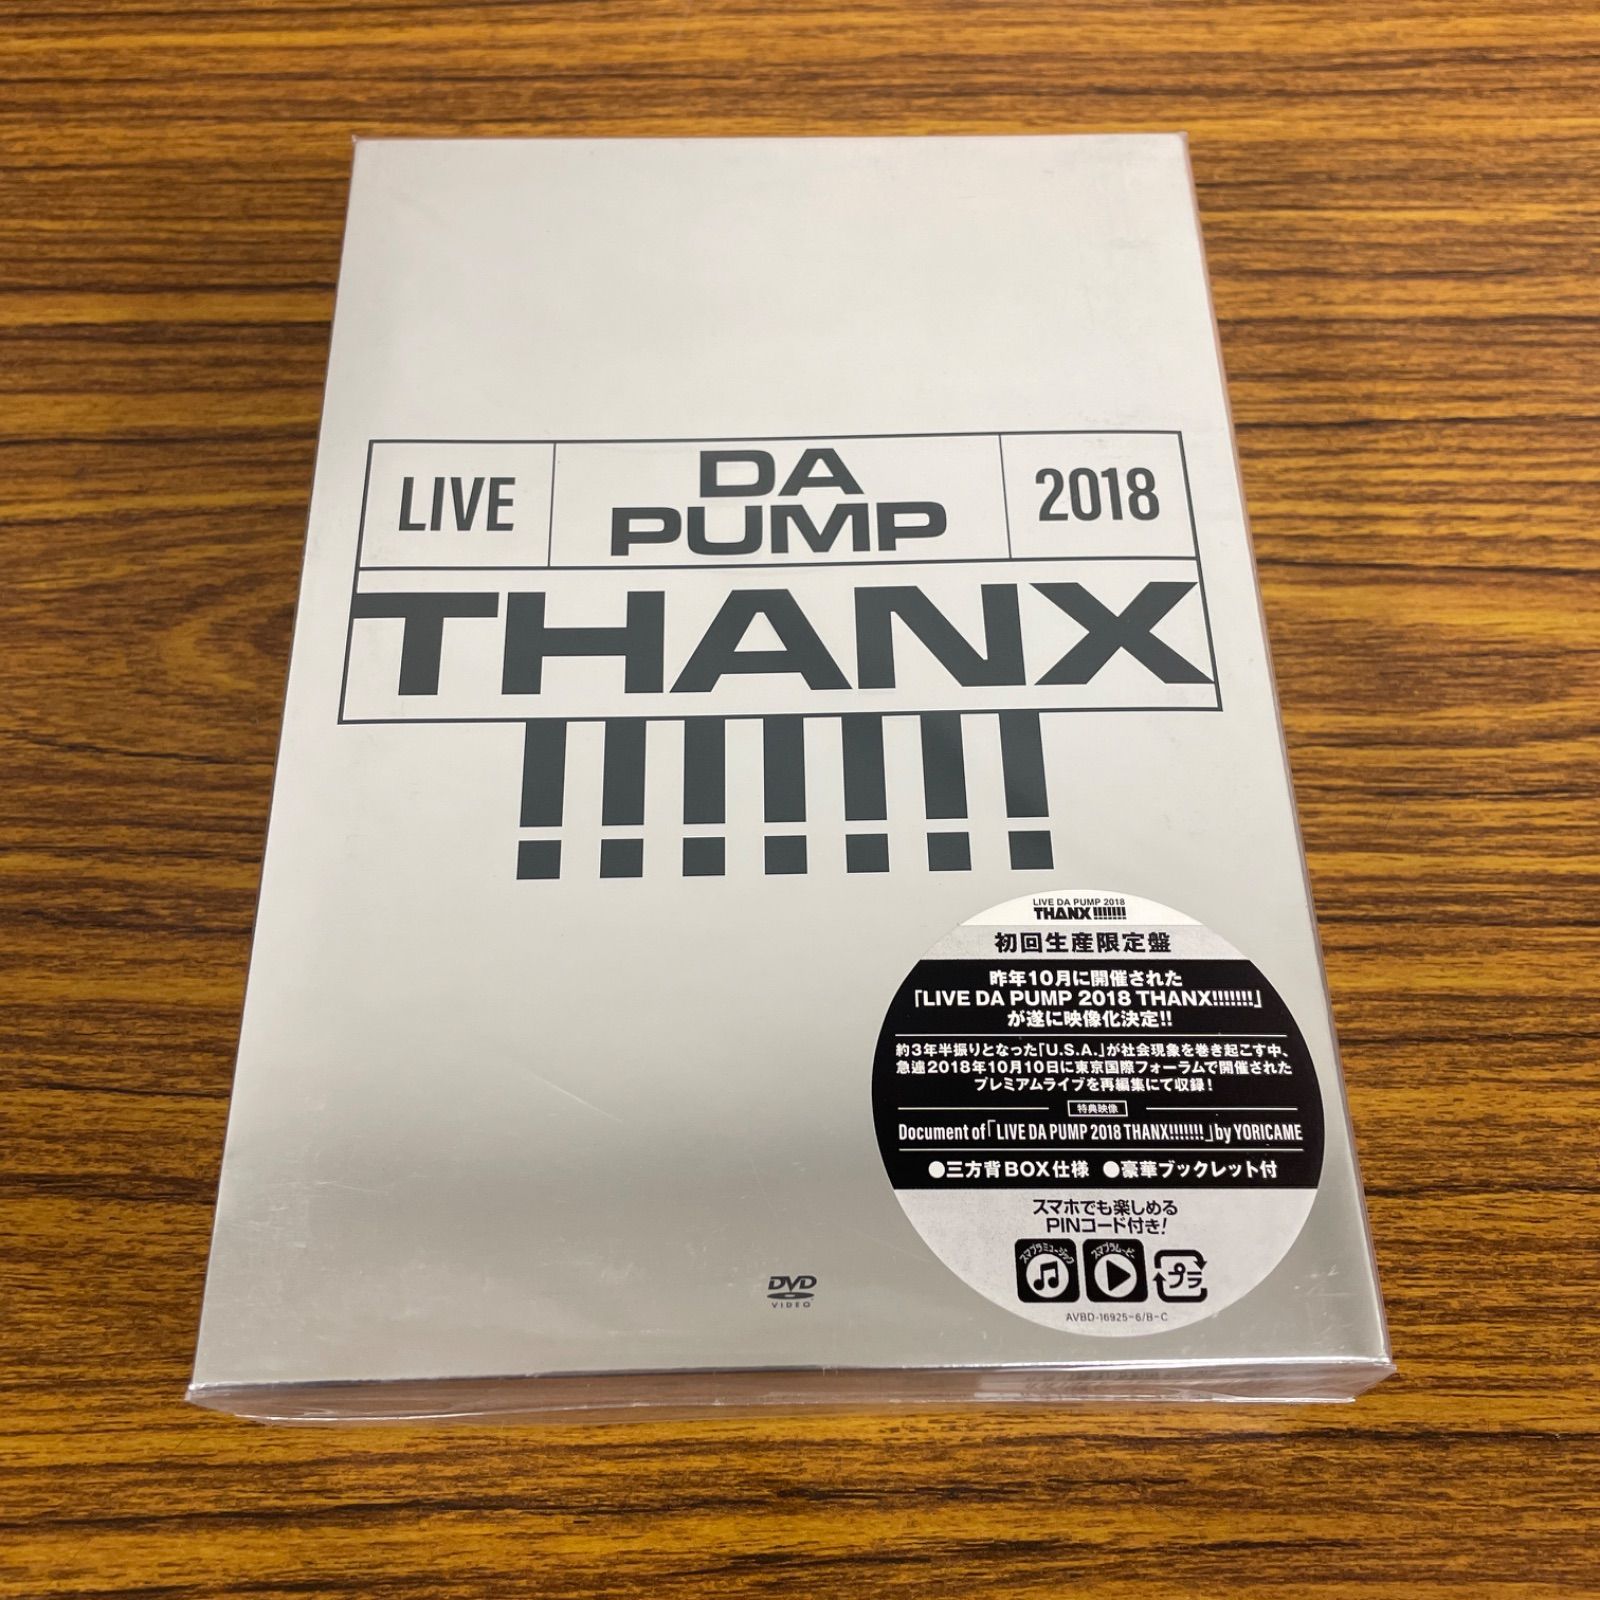 DA PUMP/LIVE DA Pump 2018 THANX!!!!!!! AT 東京国際フォーラム ホールA [DVD]